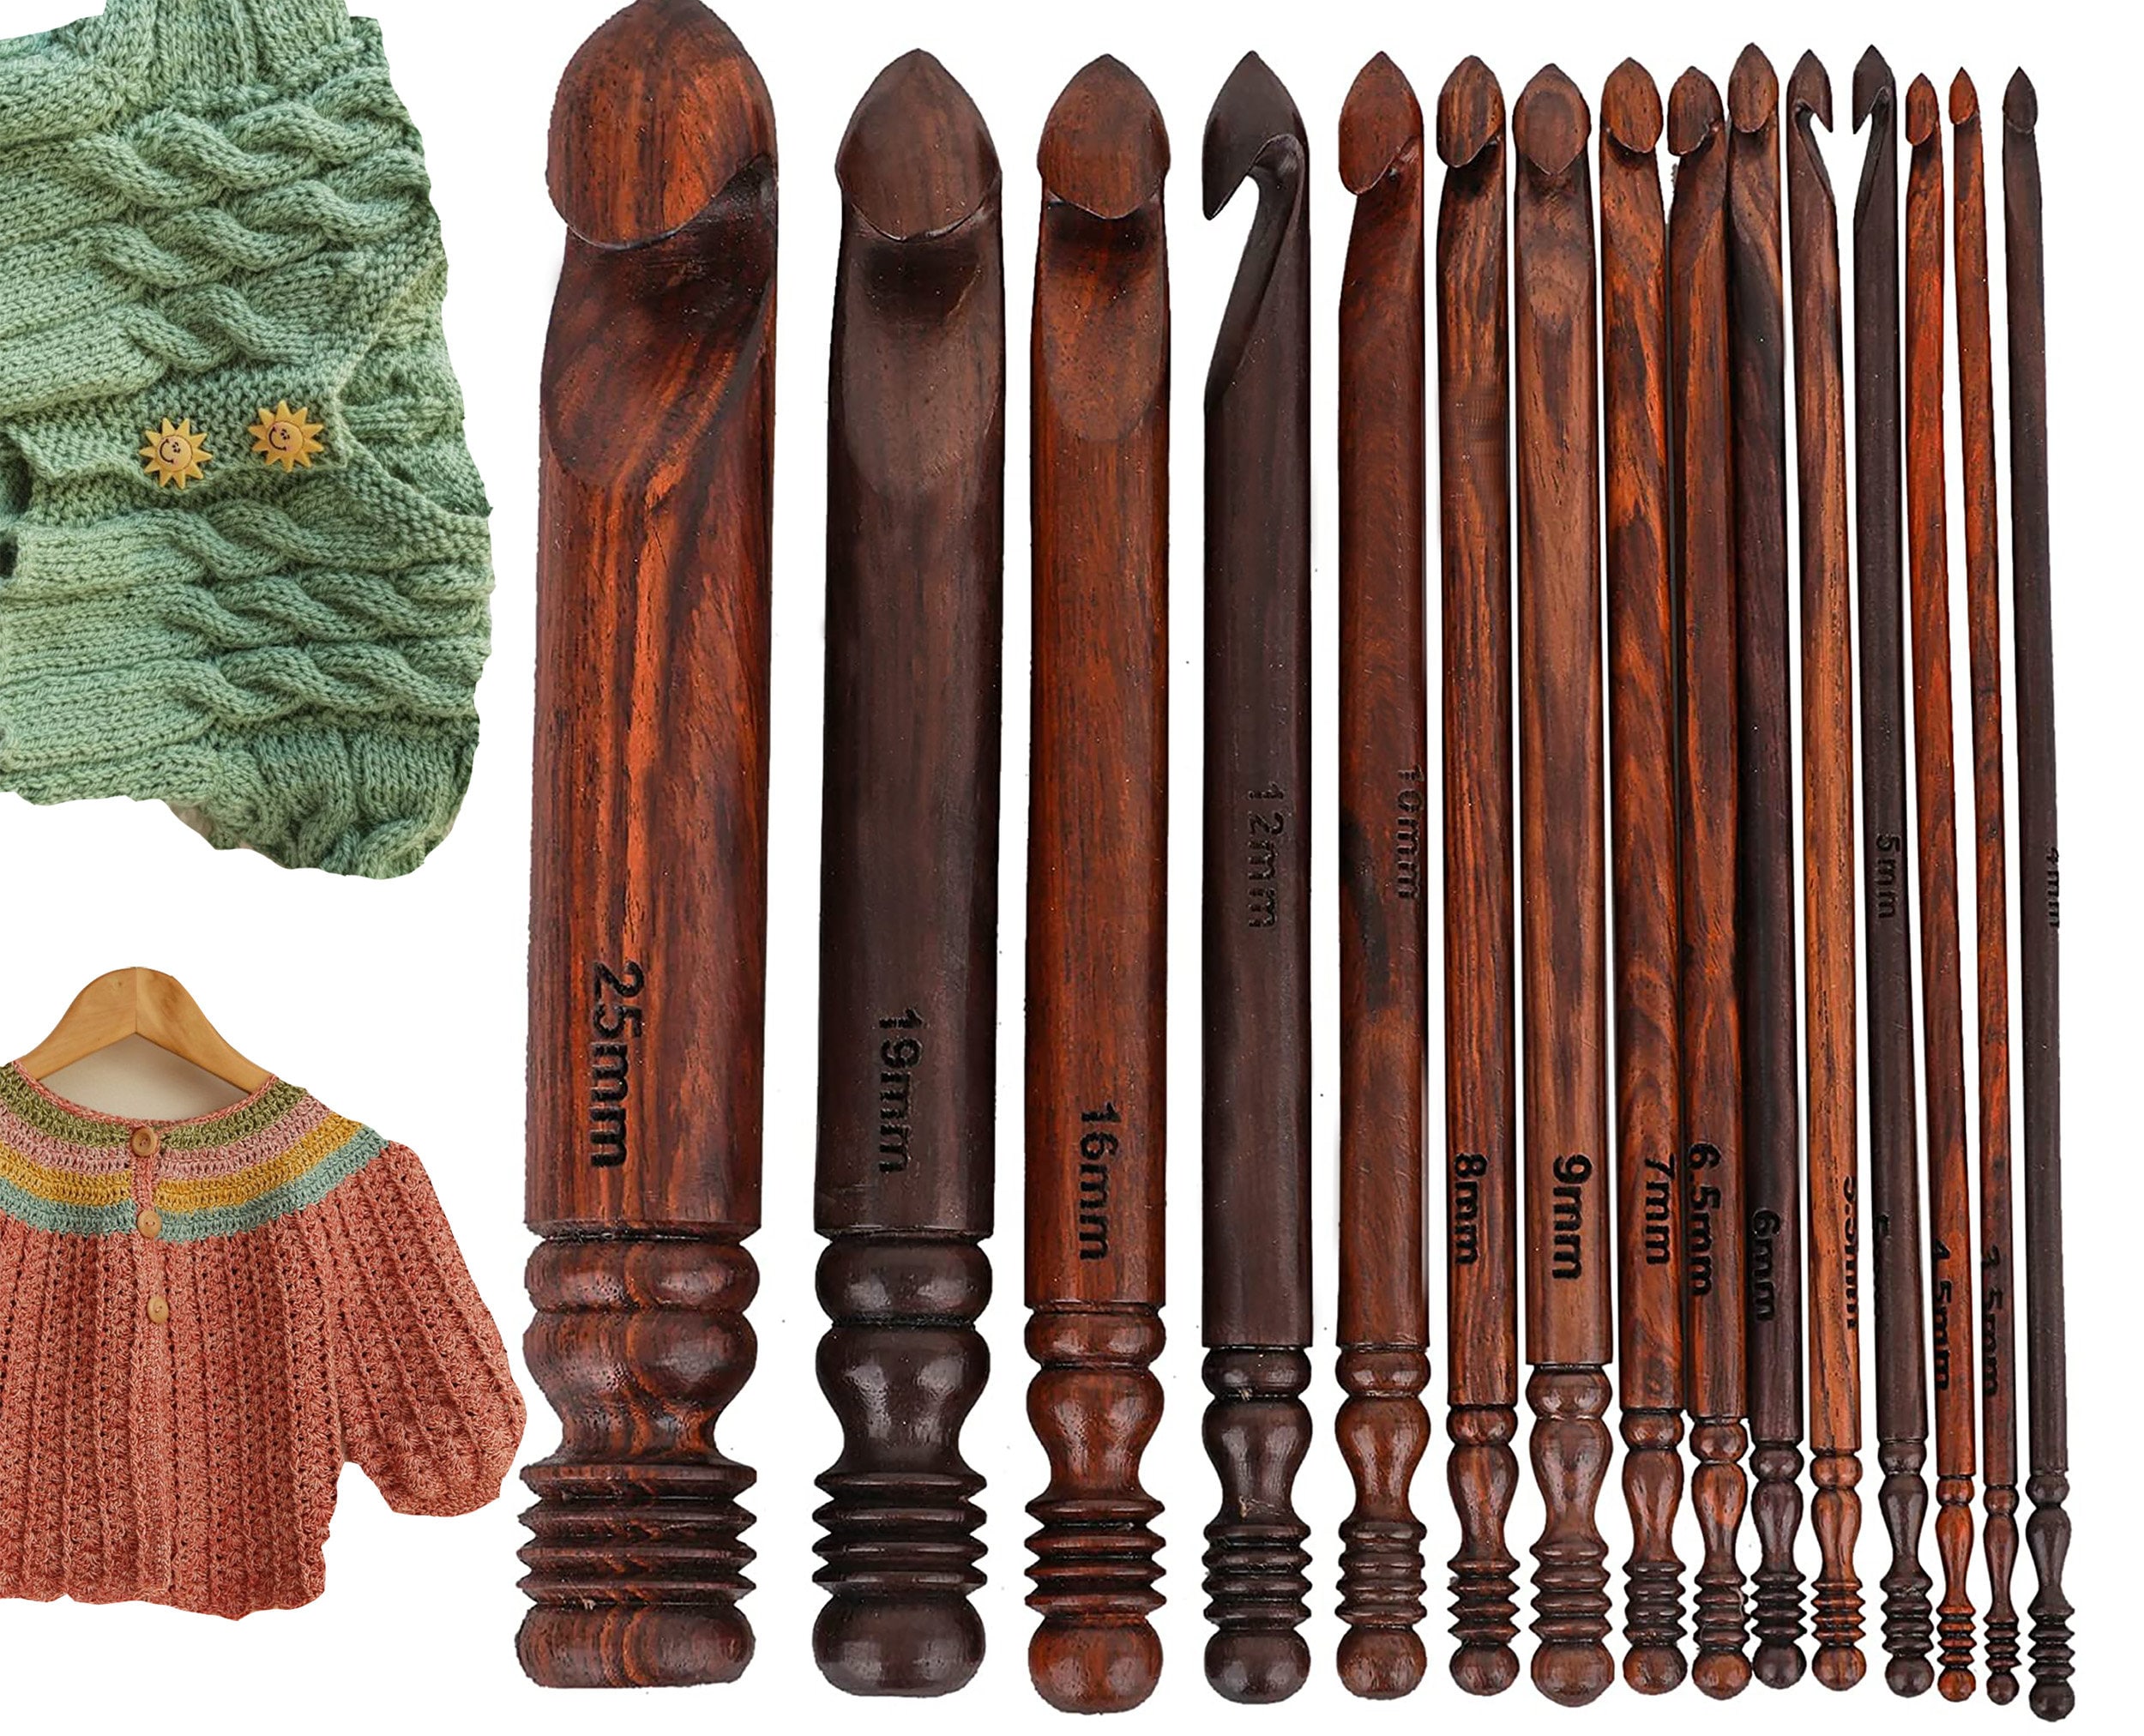 XXL CIRCULAR KNITTING NEEDLES, 40/50 Mm, Wooden Knitting Needles